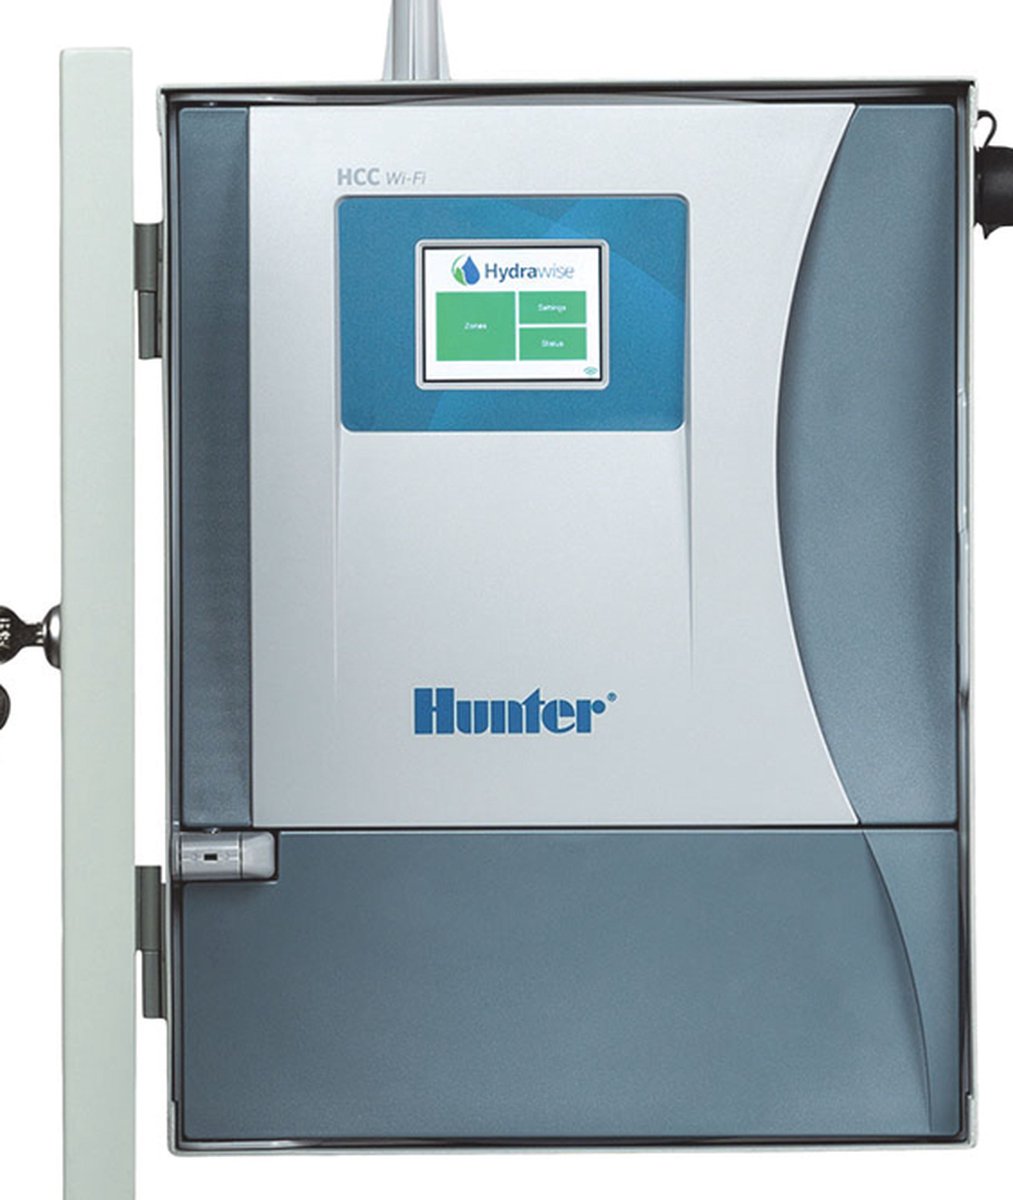 Hunter - ICM-2200 - 22 stations expansie module - voor beregeningscomputer - Hydrawise Commercial Control - -(HCC-800-PL8) - maximaal 1 per controller